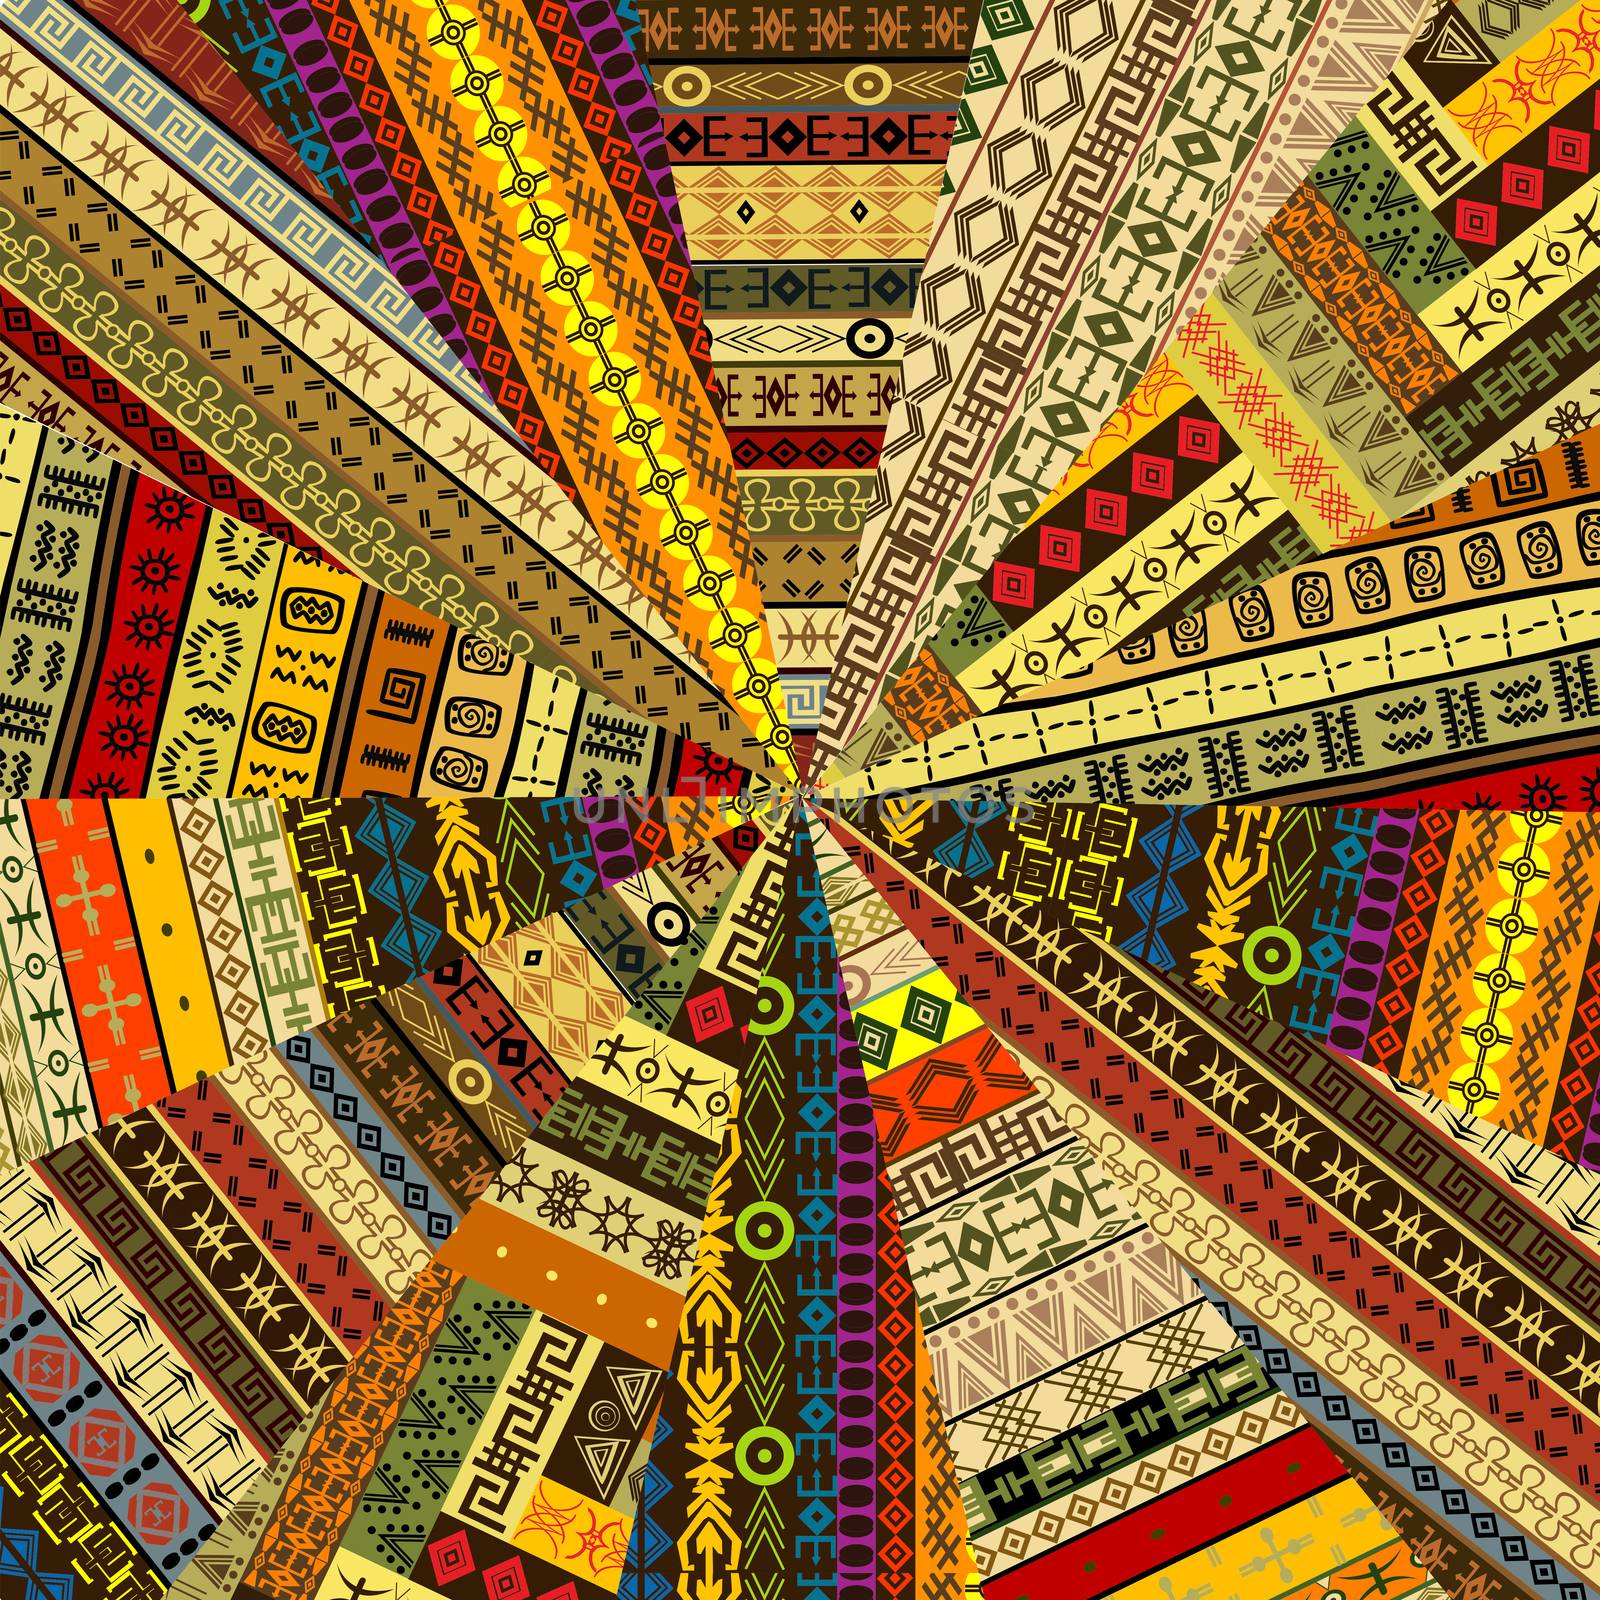 Sunburst made of patchwork fabric witf ethnic motifs by hibrida13